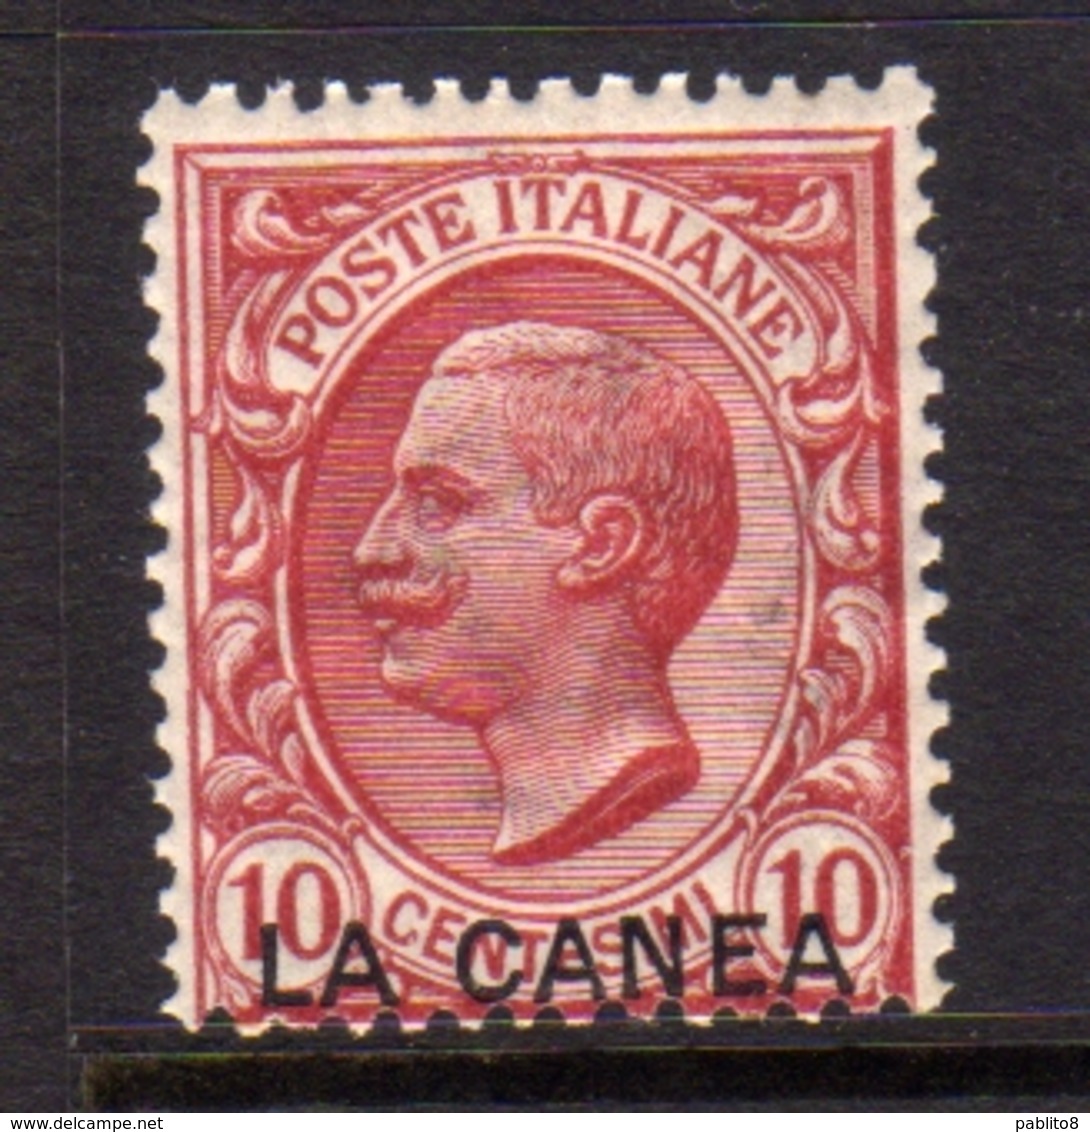 LA CANEA 1907 - 1912 SOPRASTAMAPTO D'ITALIA ITALY OVERPRINTED CENT. 10c MNH - La Canea